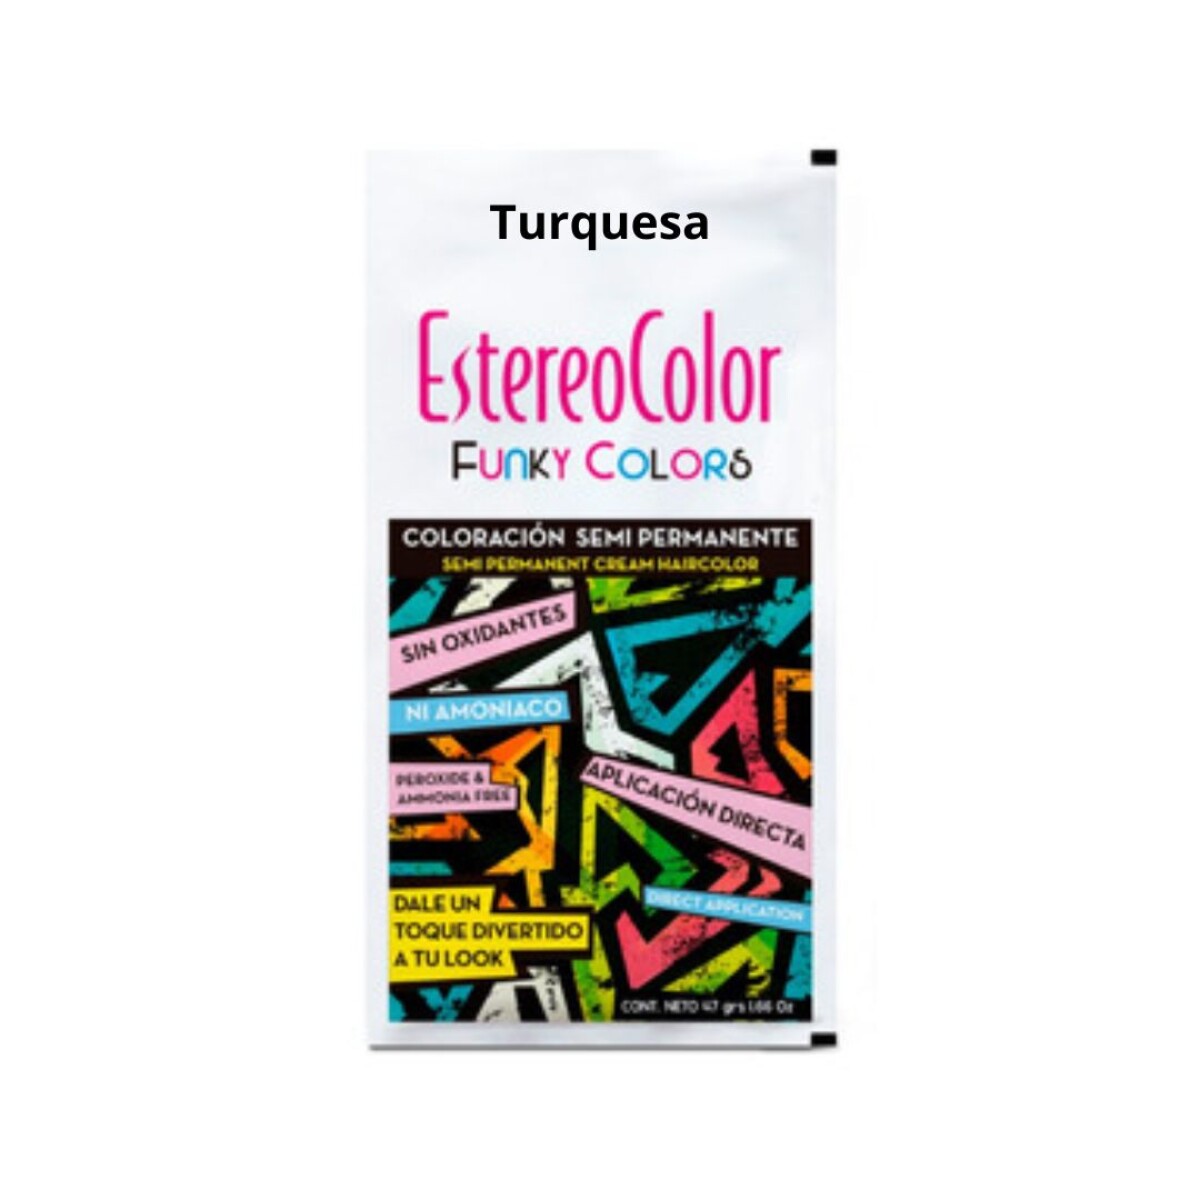 EstereoColor Funky Colors - Turquesa 